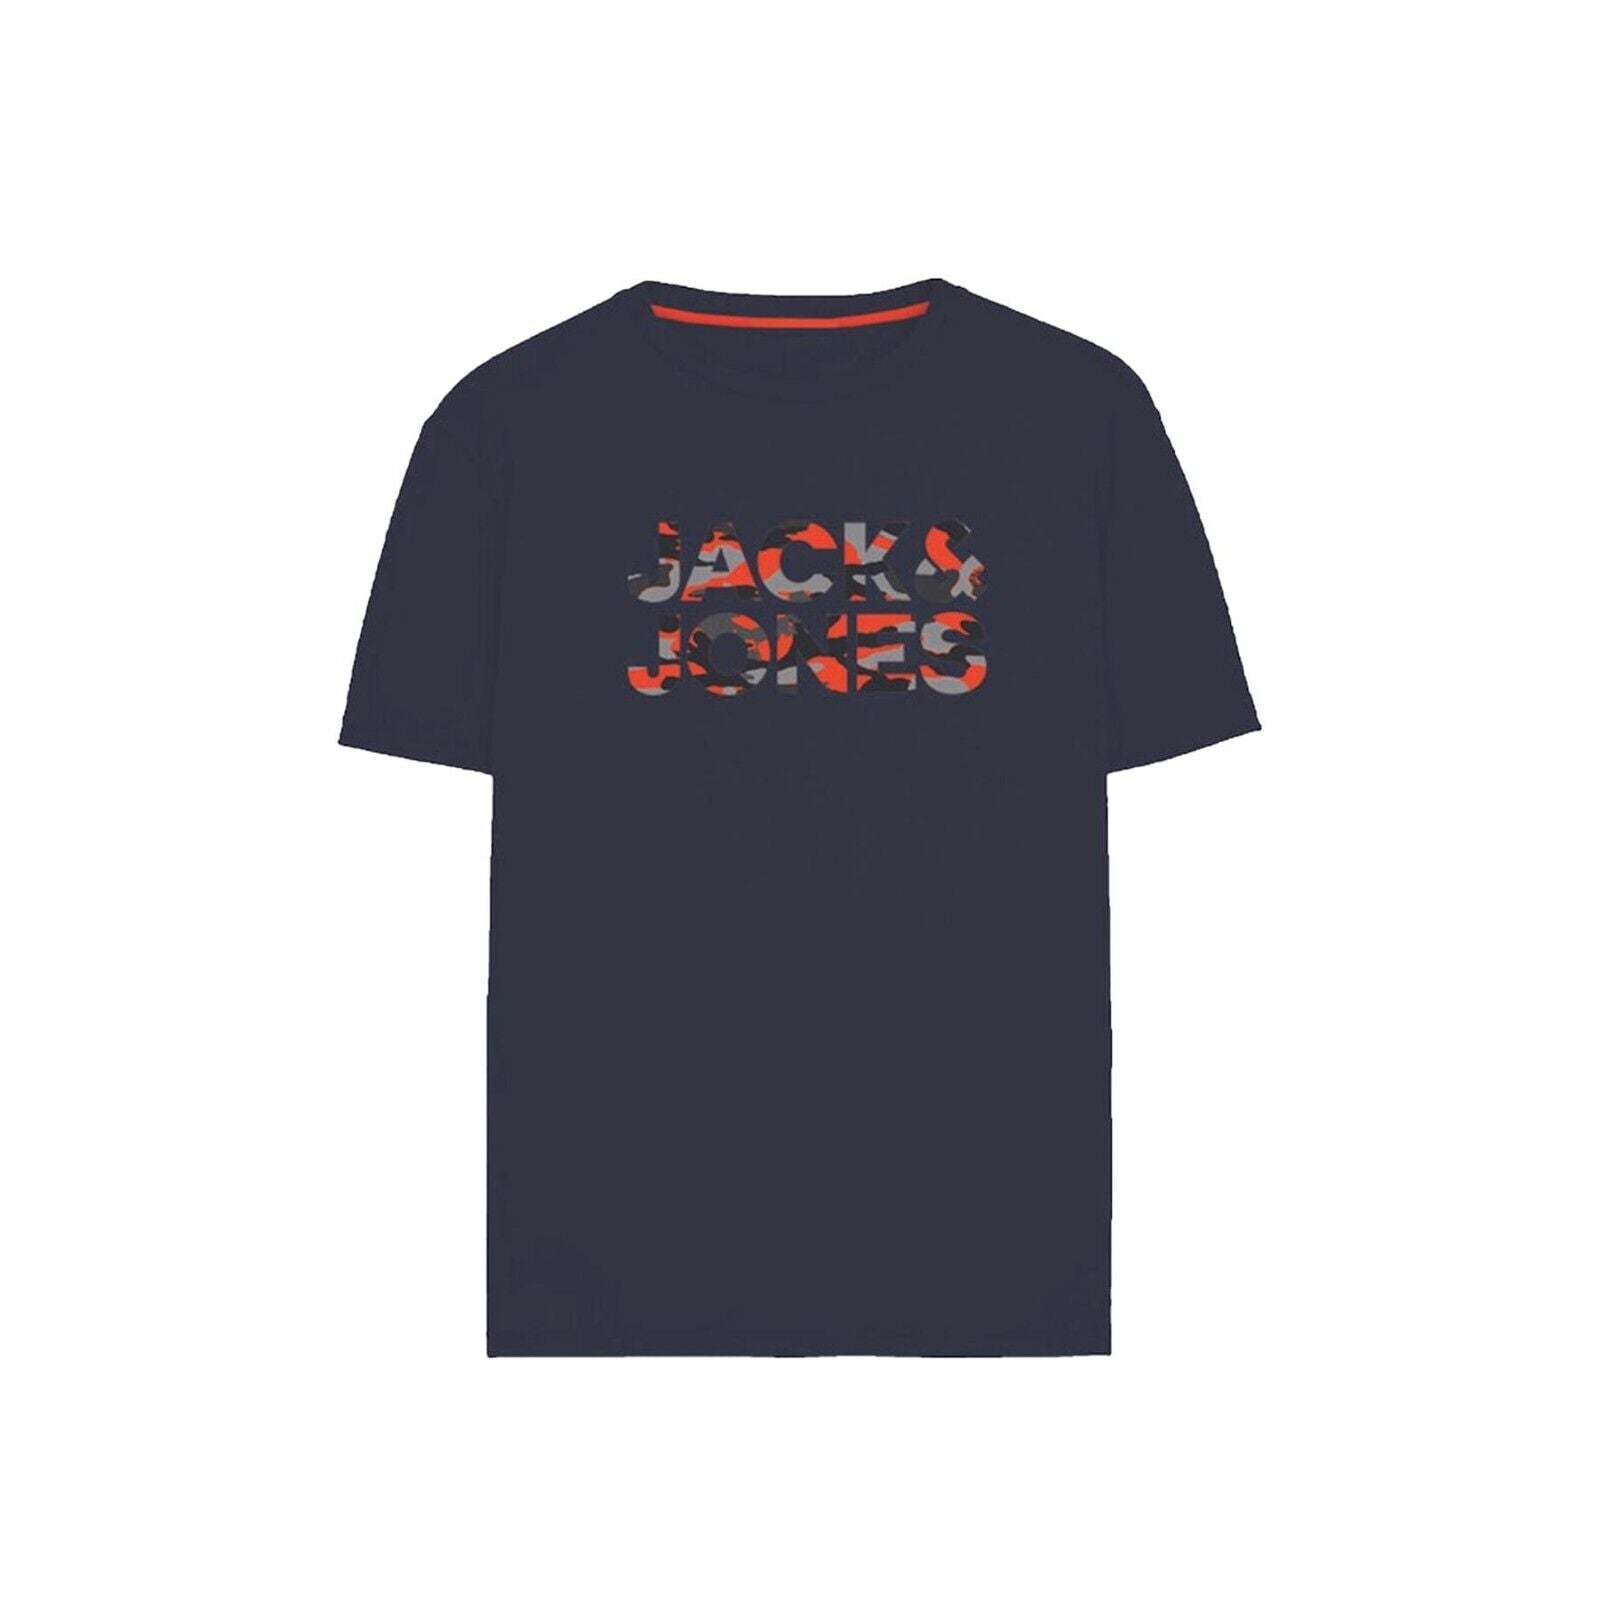 Kids 3 Pack Jack & Jones Boys T-Shirts Multipack Designer Crew Neck Tee 6-16 Yrs